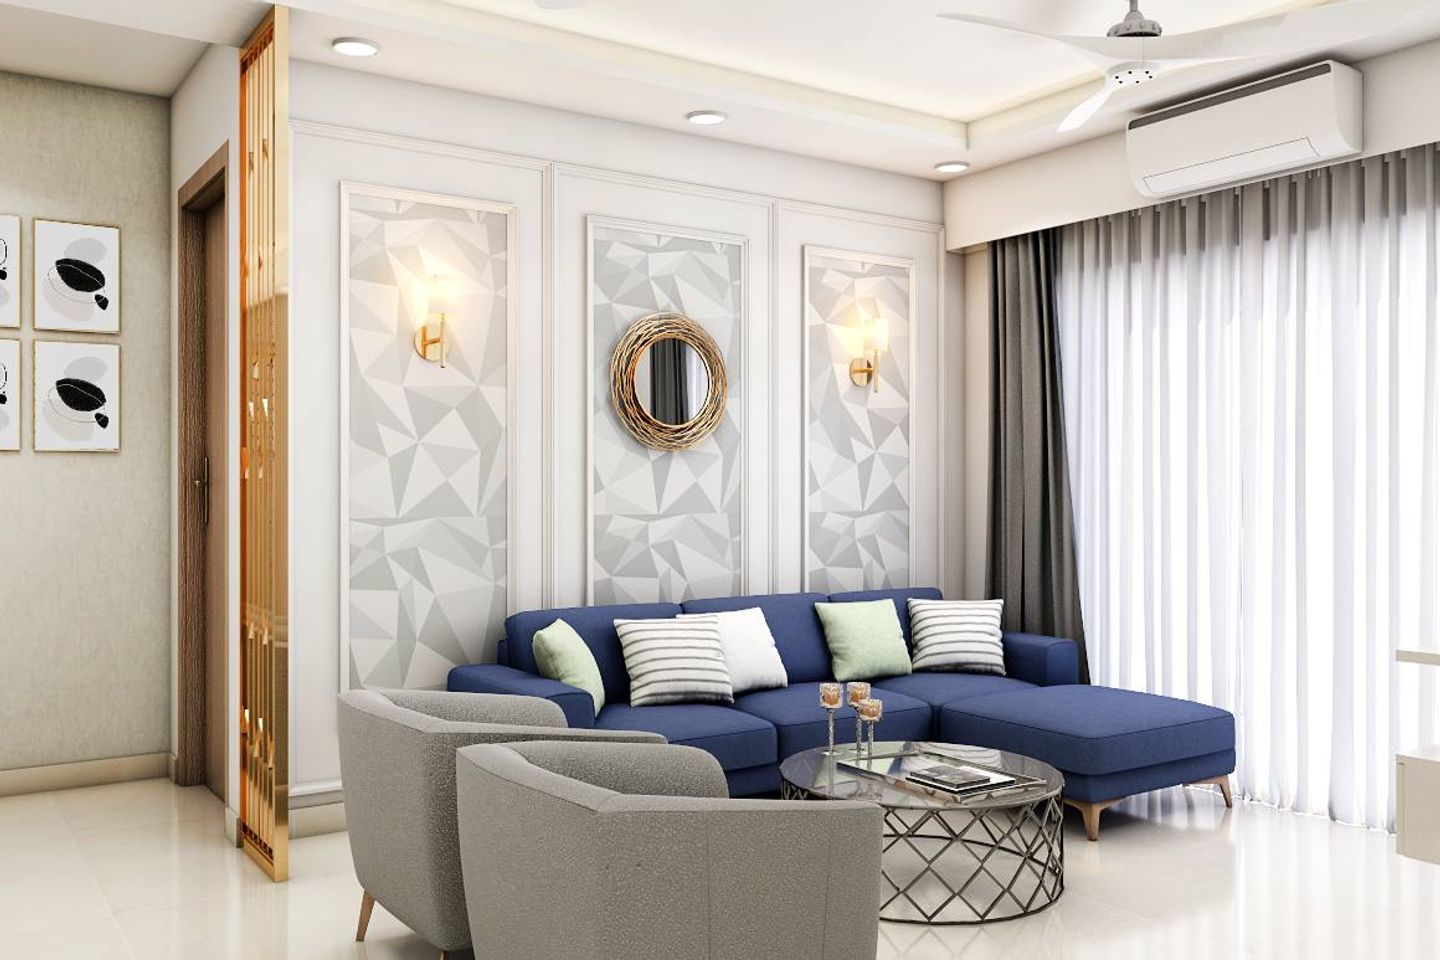 Contemporary Living Room Design With Geometric Wallpaper And Blue Sofa